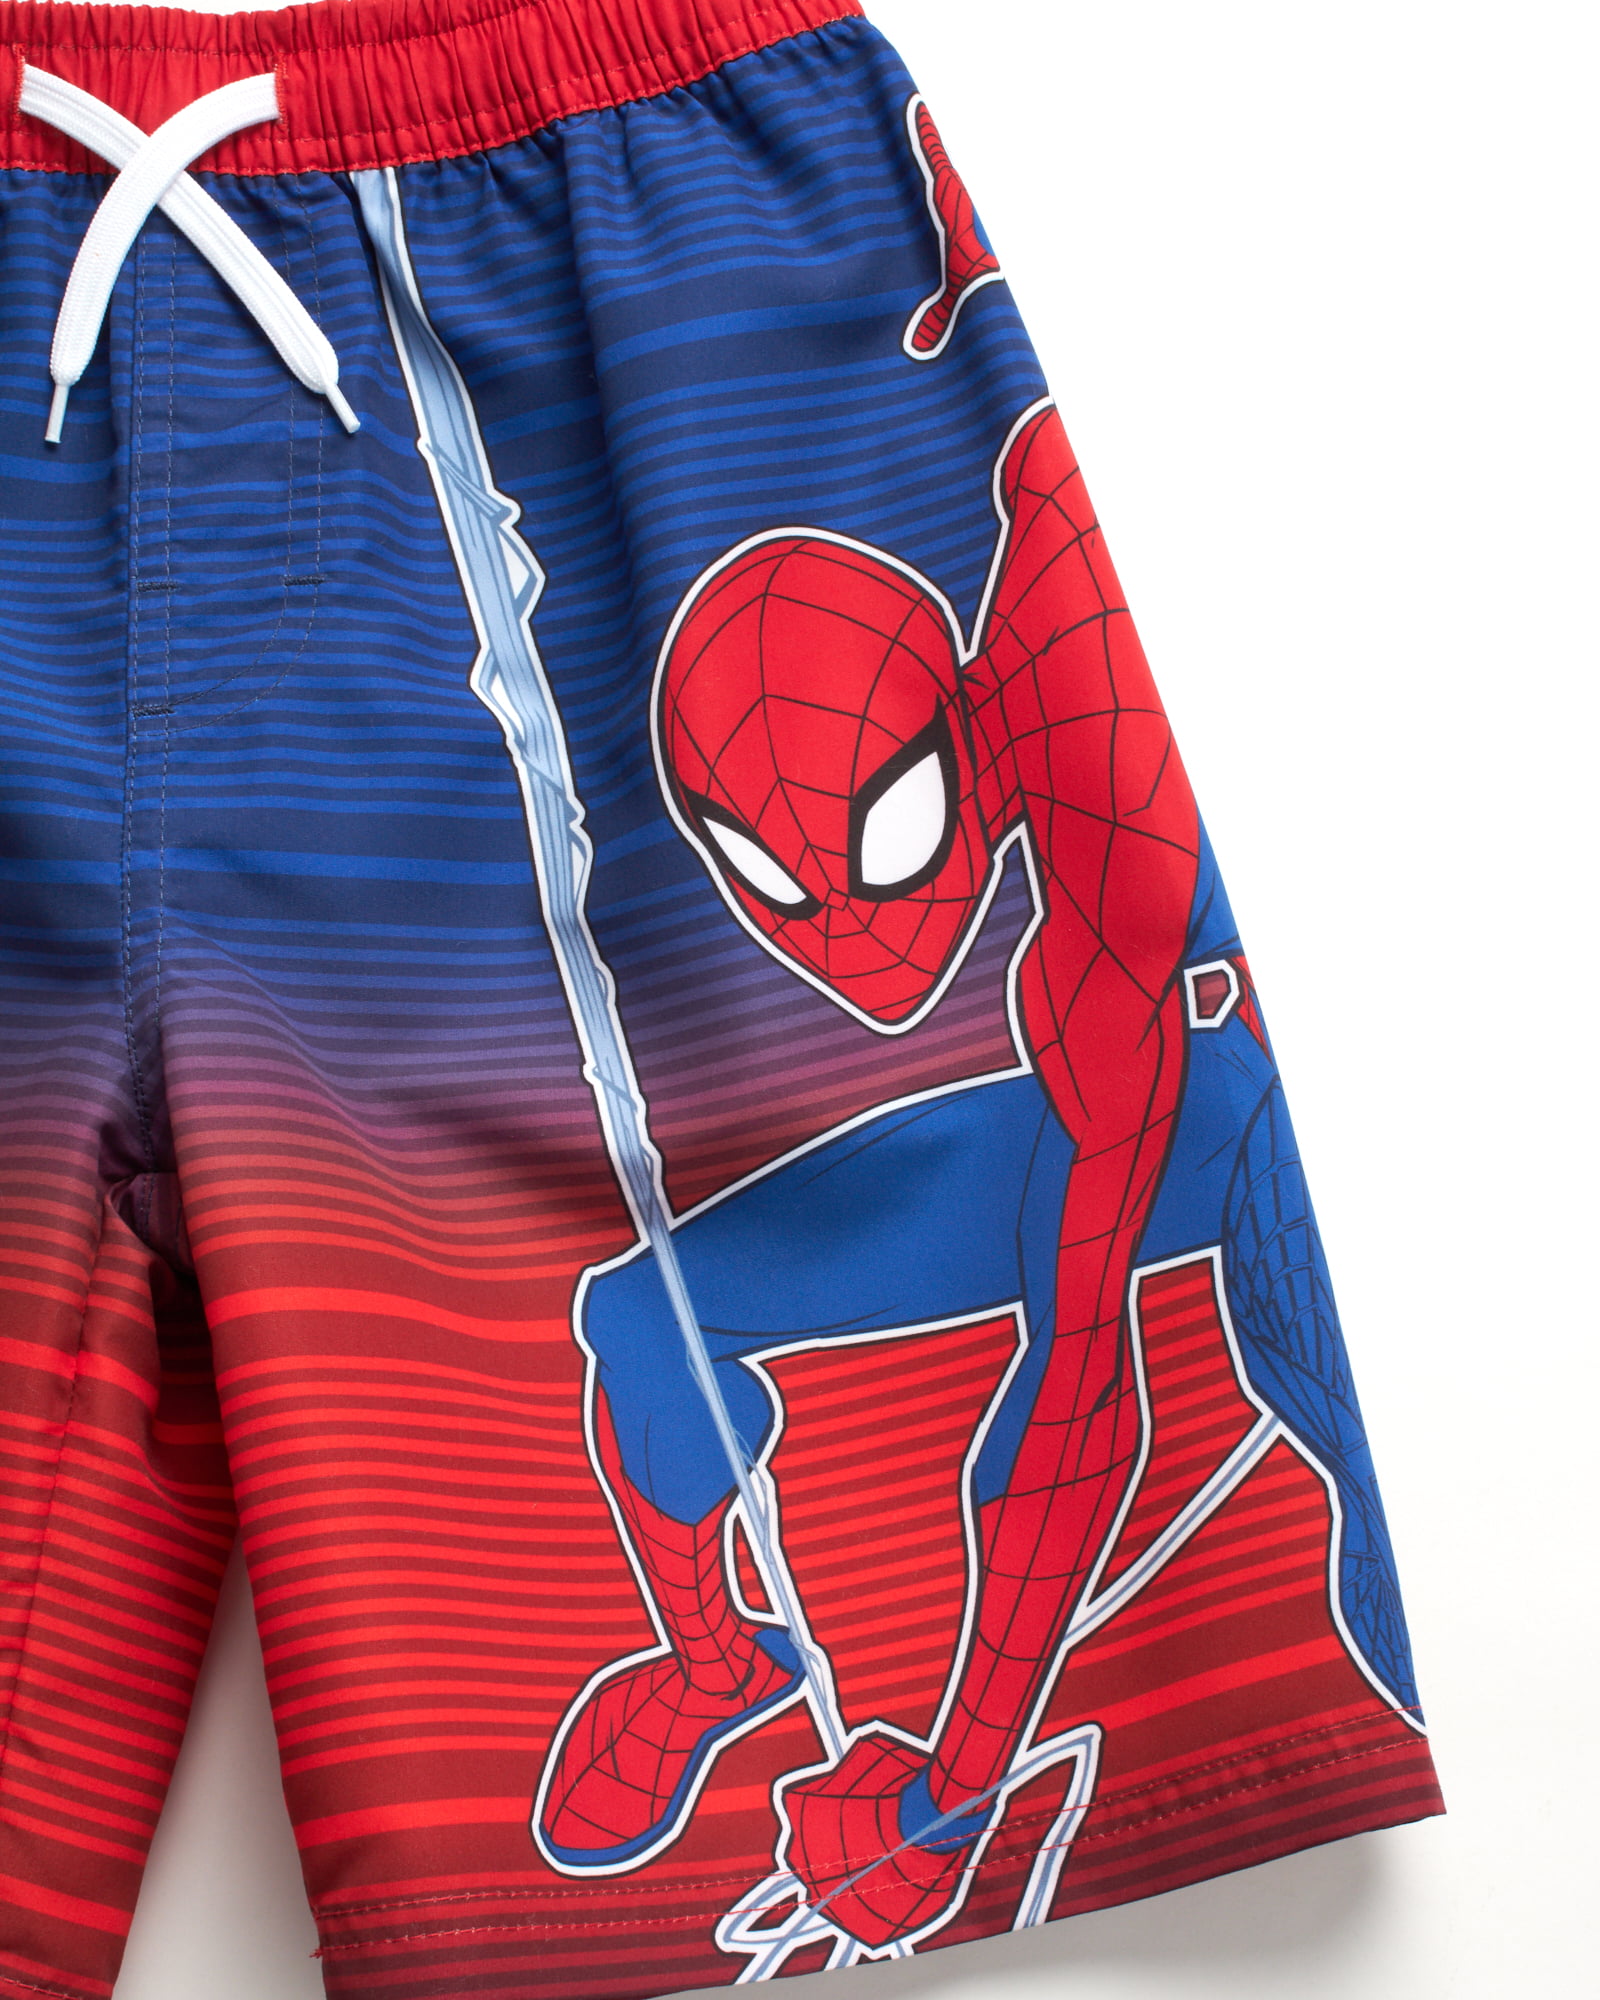 Boys 4-20 Spider-Man Swim Trunks